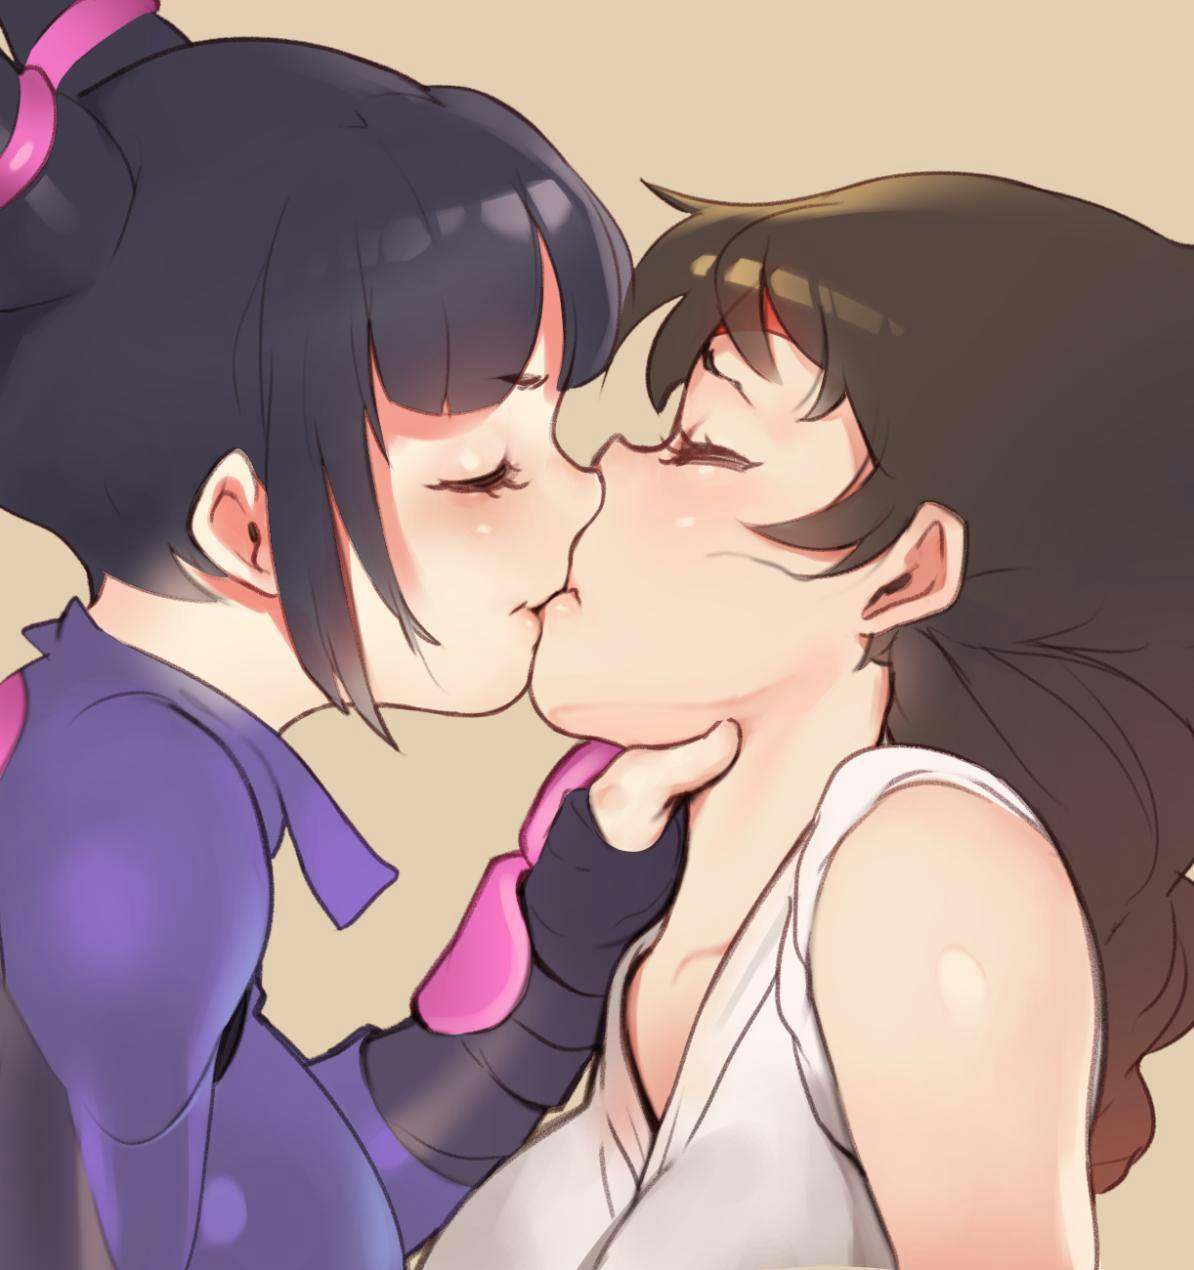 Western Lesbian Hentai - Lesbian Hentai: Best Yuri Hentai to Read and Stream Online